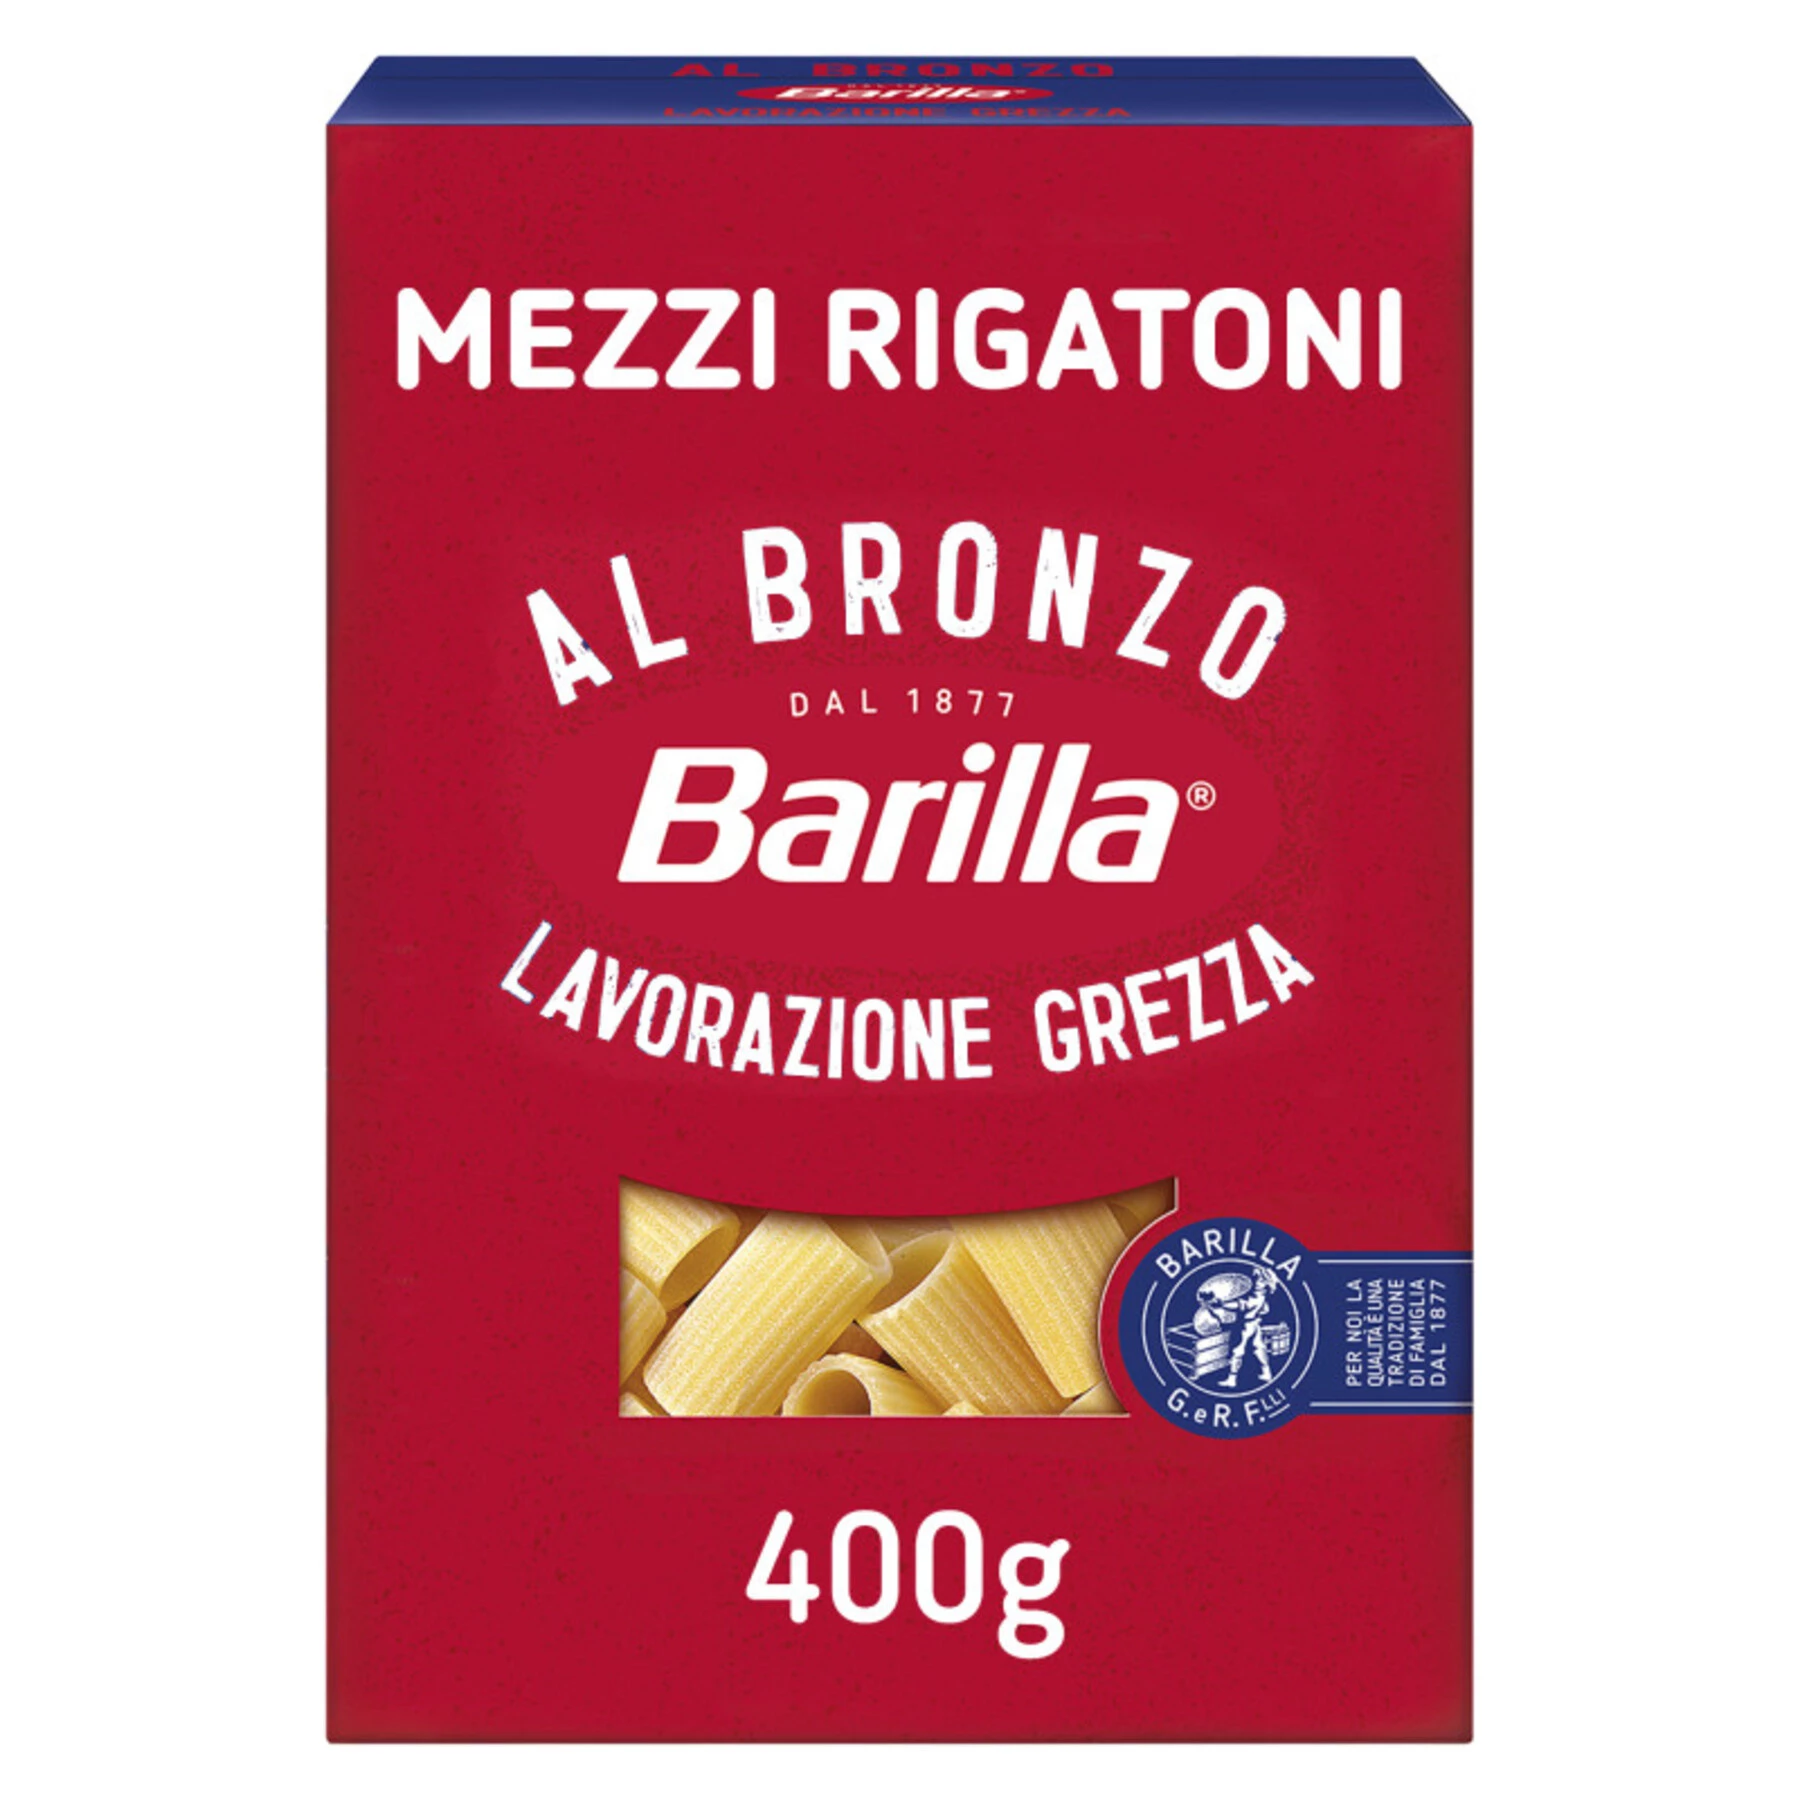 Bronzepasteten Mezzi Rigatoni, 400g - BARILLA